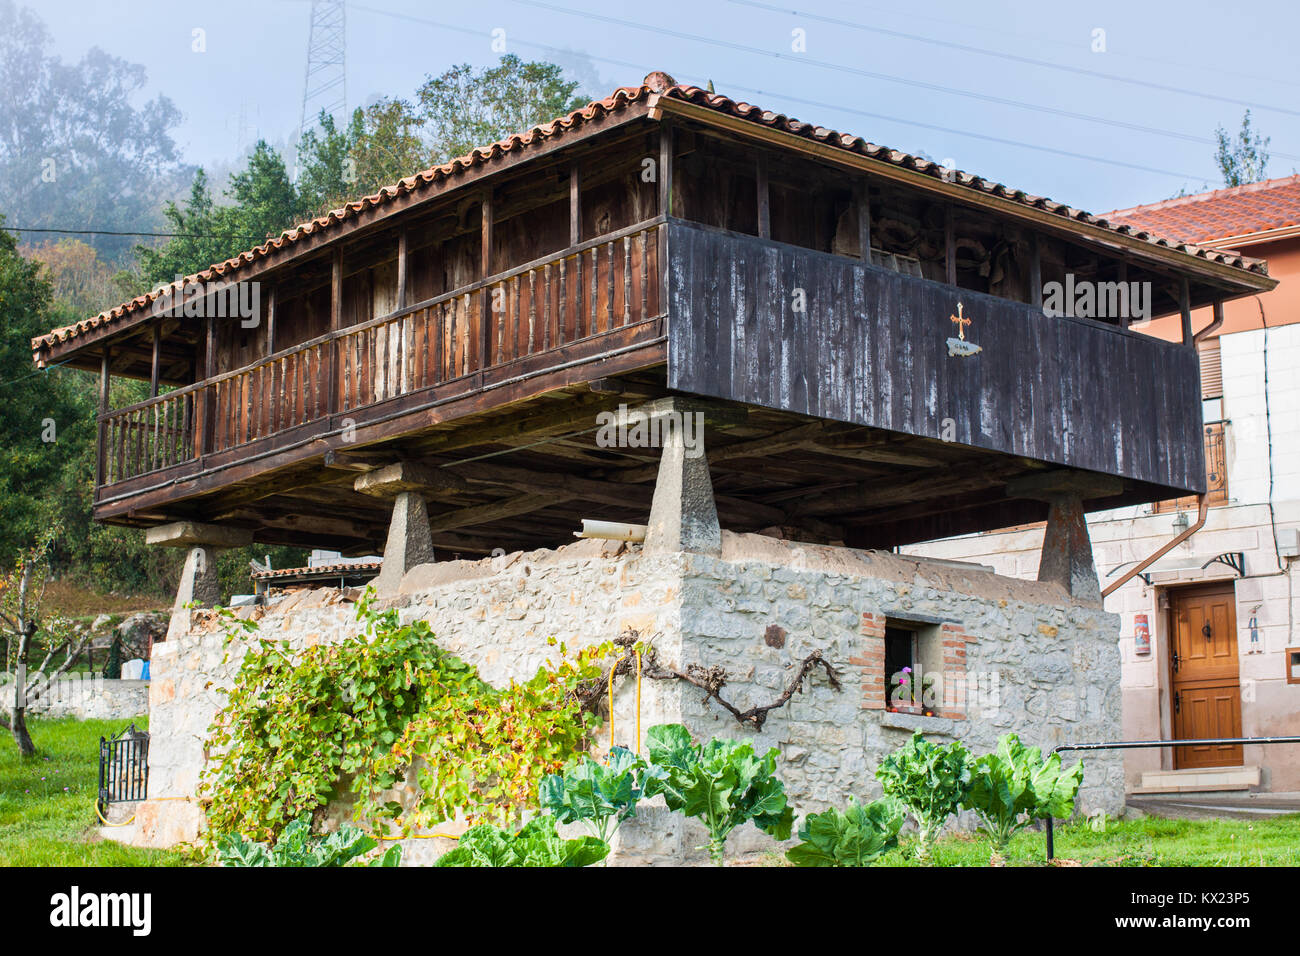 GALLEGOS, SPAIN - OCTOBER 31, 2017: Asturian granary (horreo) in the garden in Gallegos, Asturias, Spain Stock Photo